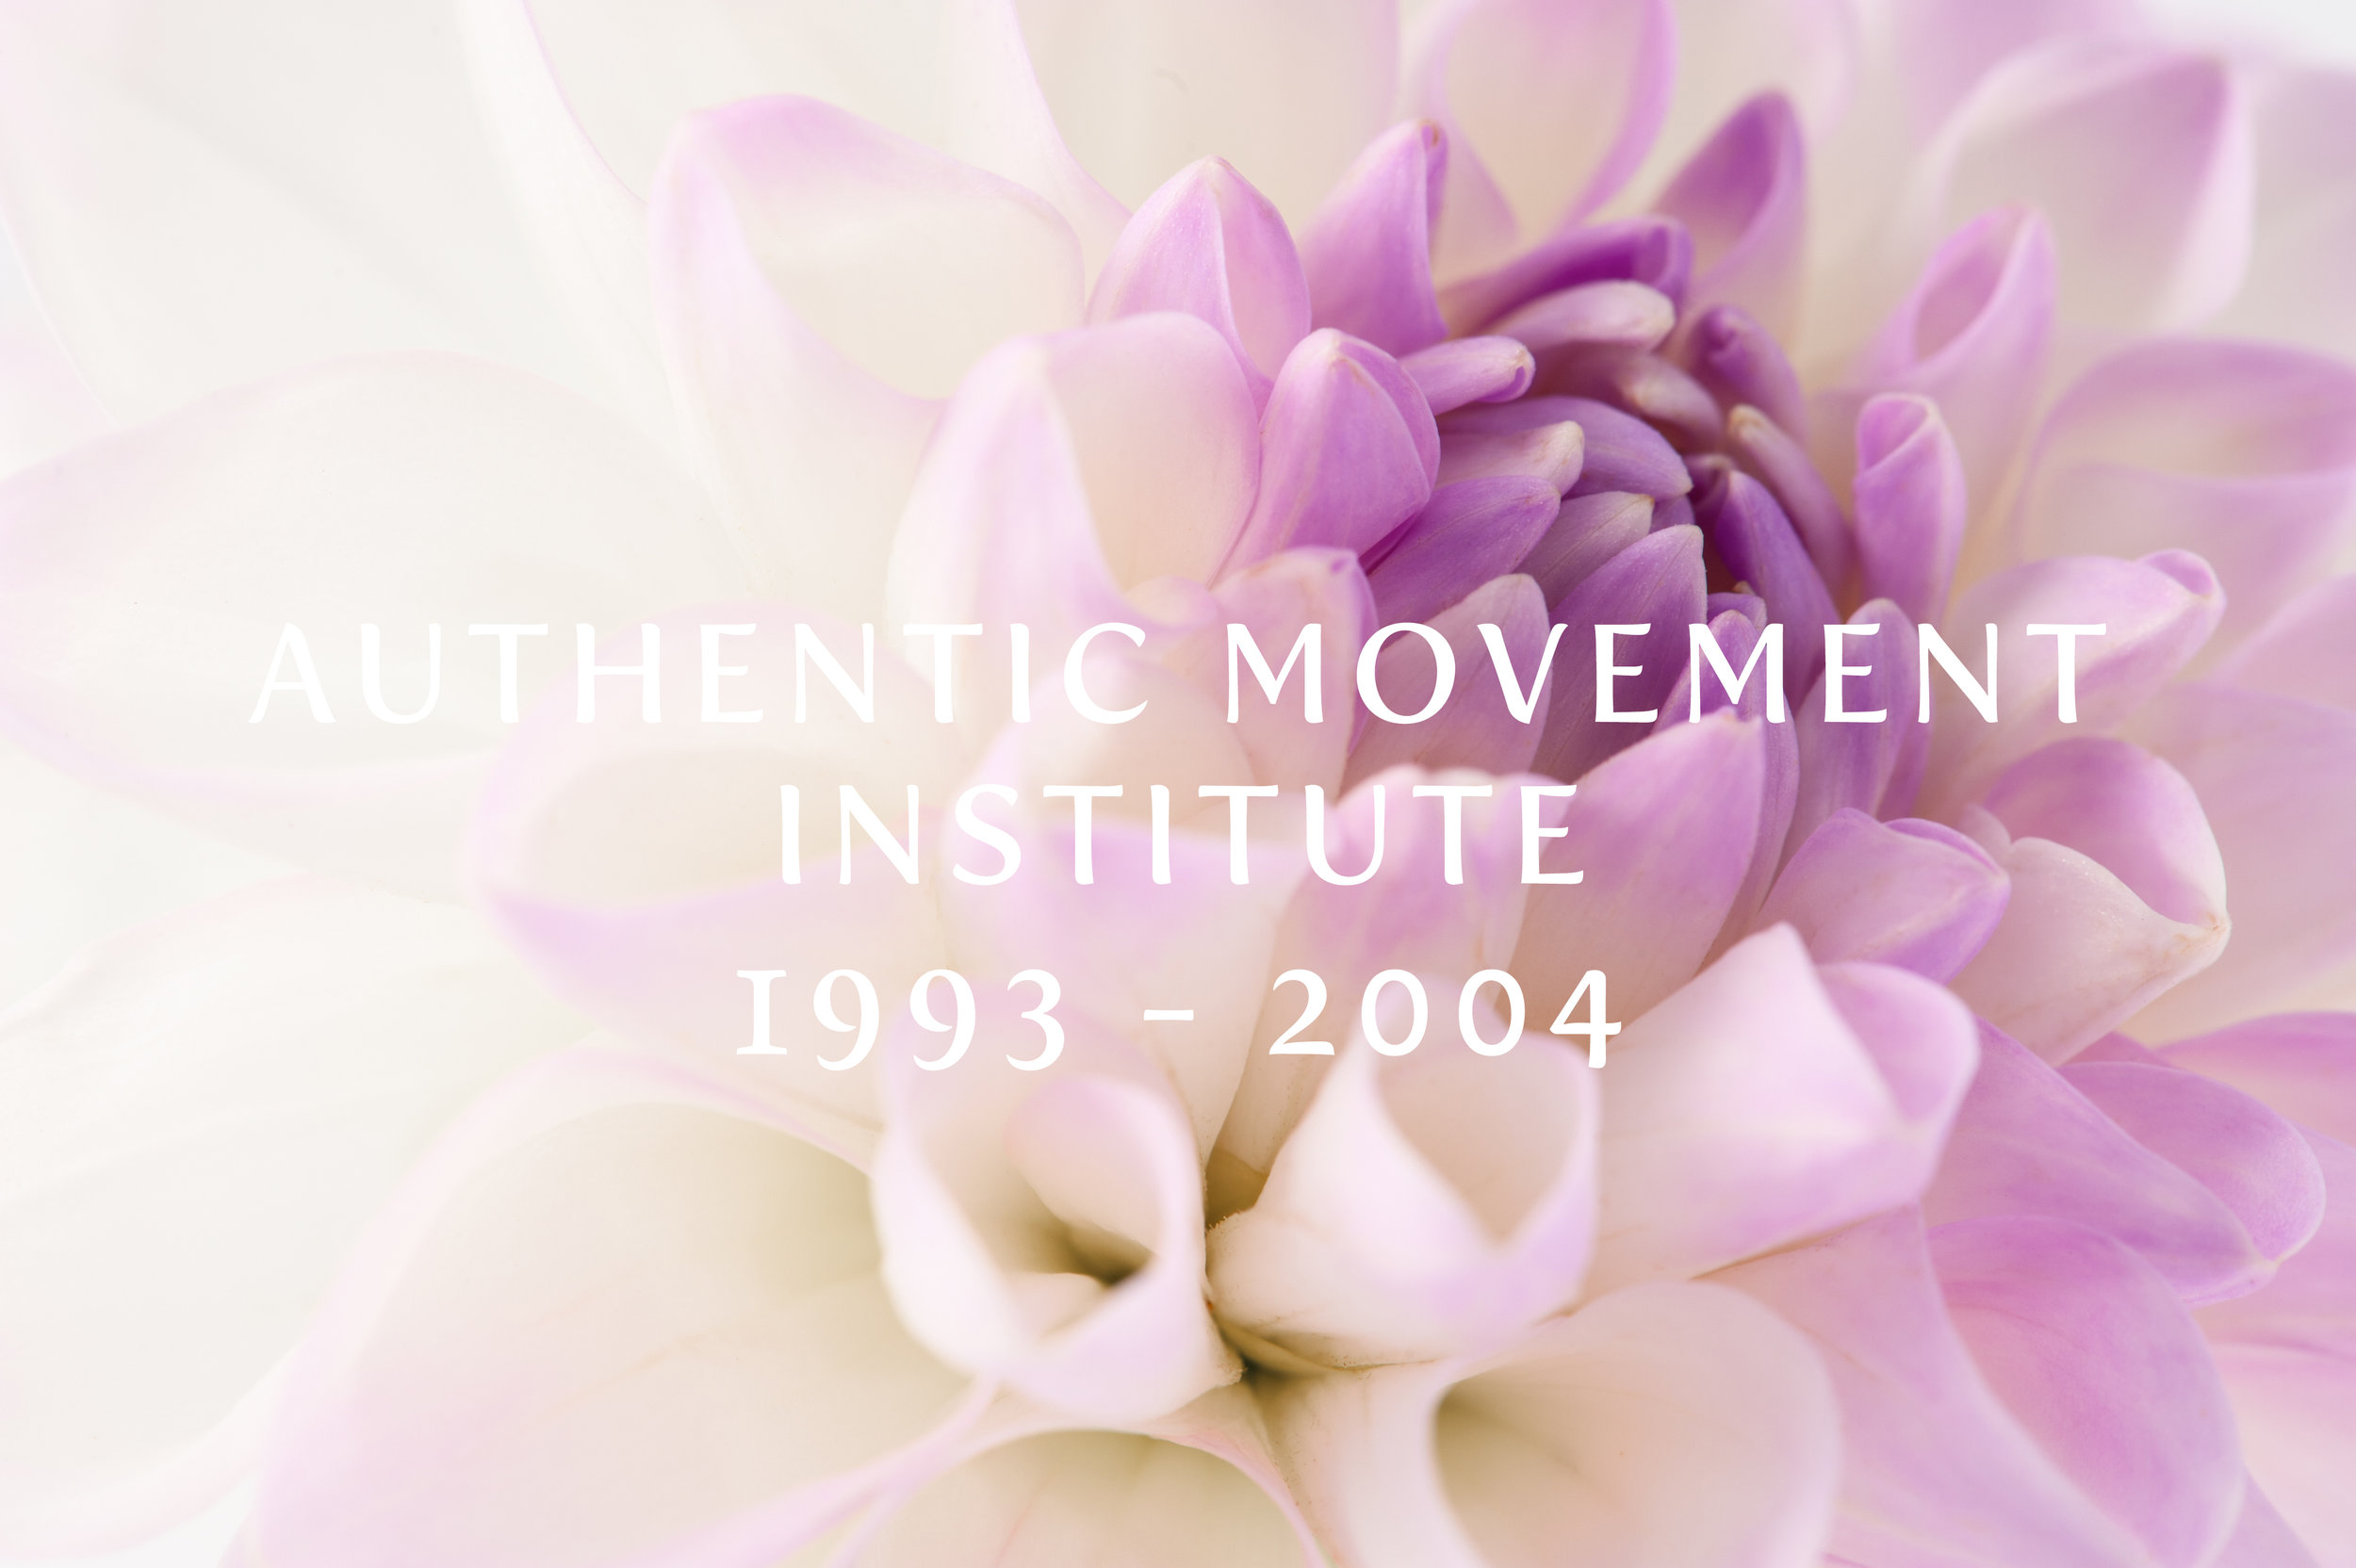 Authentik Movement Training